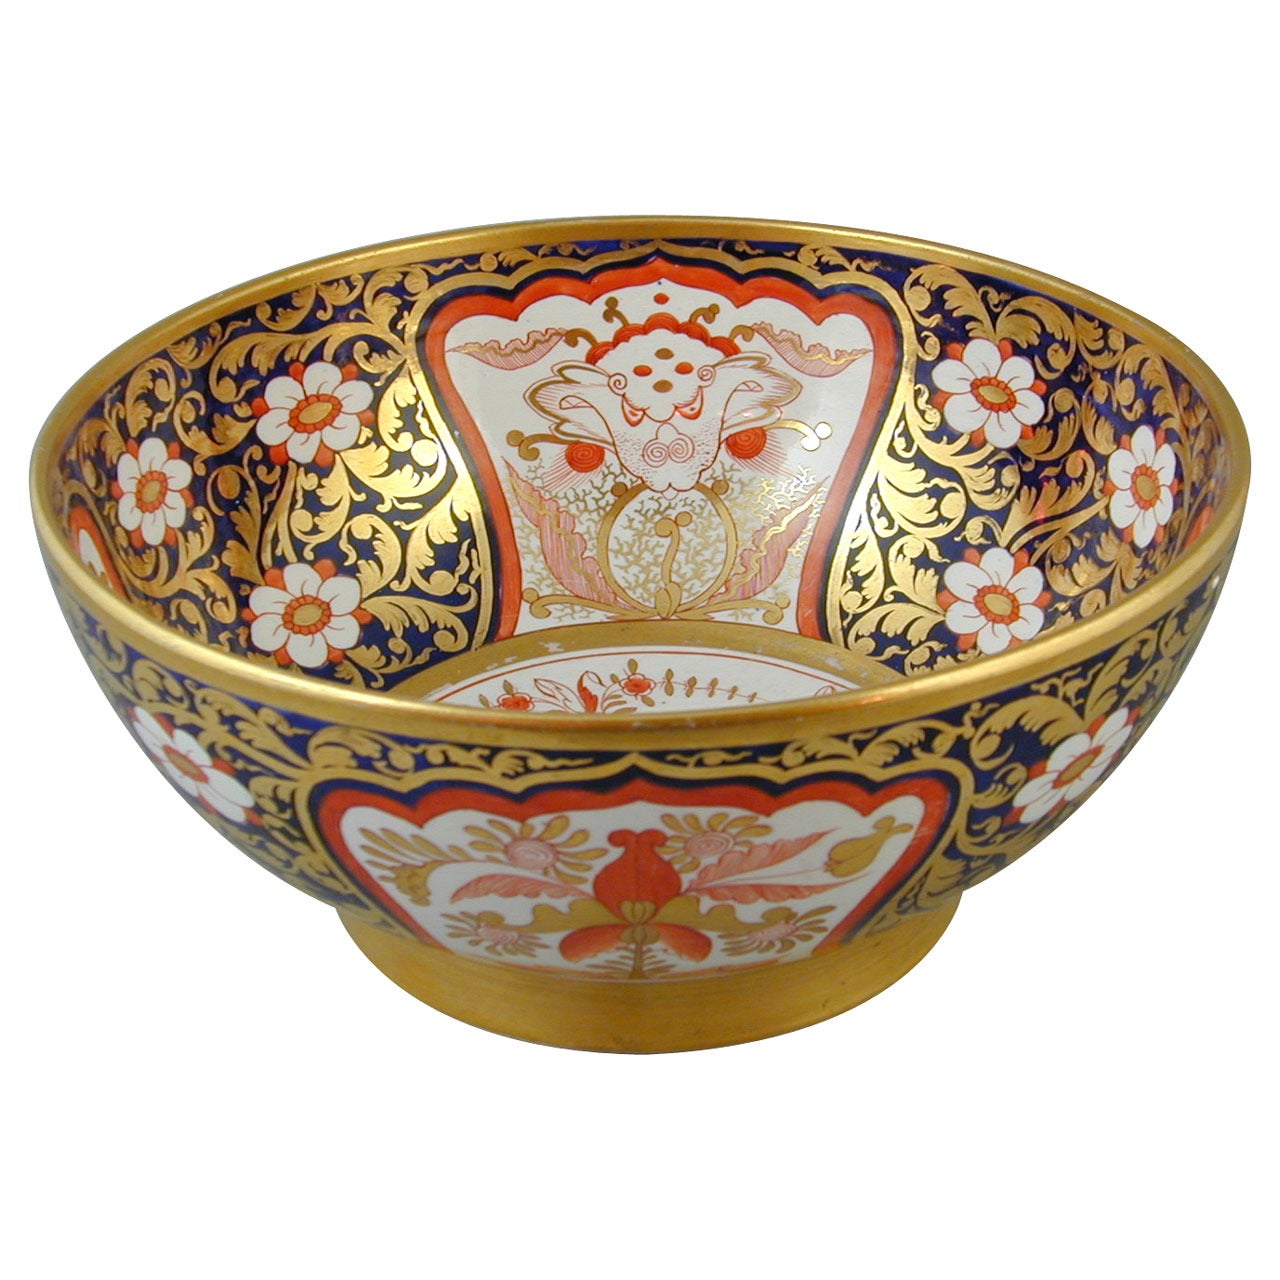 Minton punch bowl in bright Imari colours